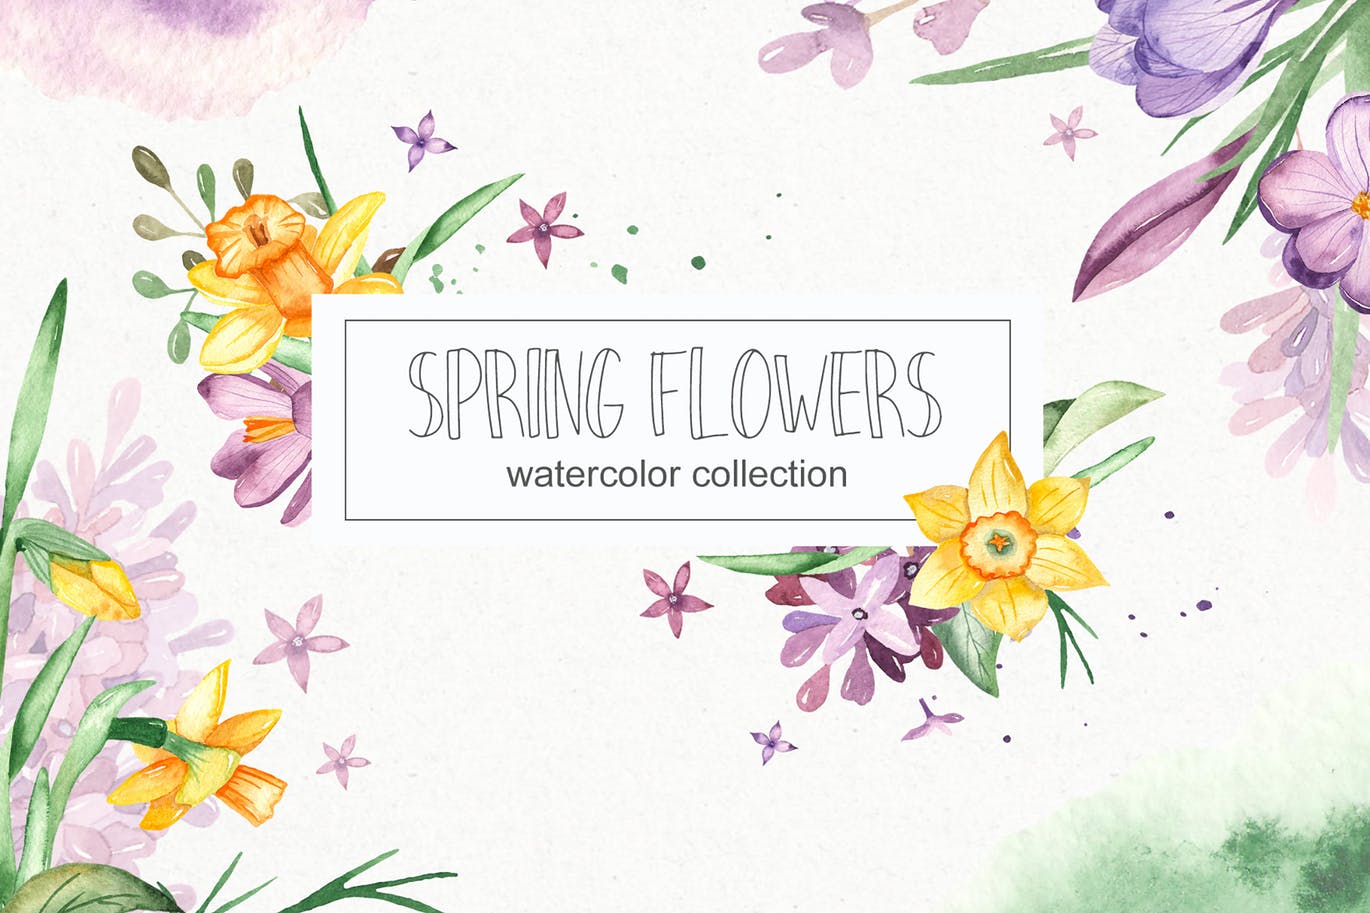 春季花卉水彩素材套装 Watercolor spring flowers collection插图